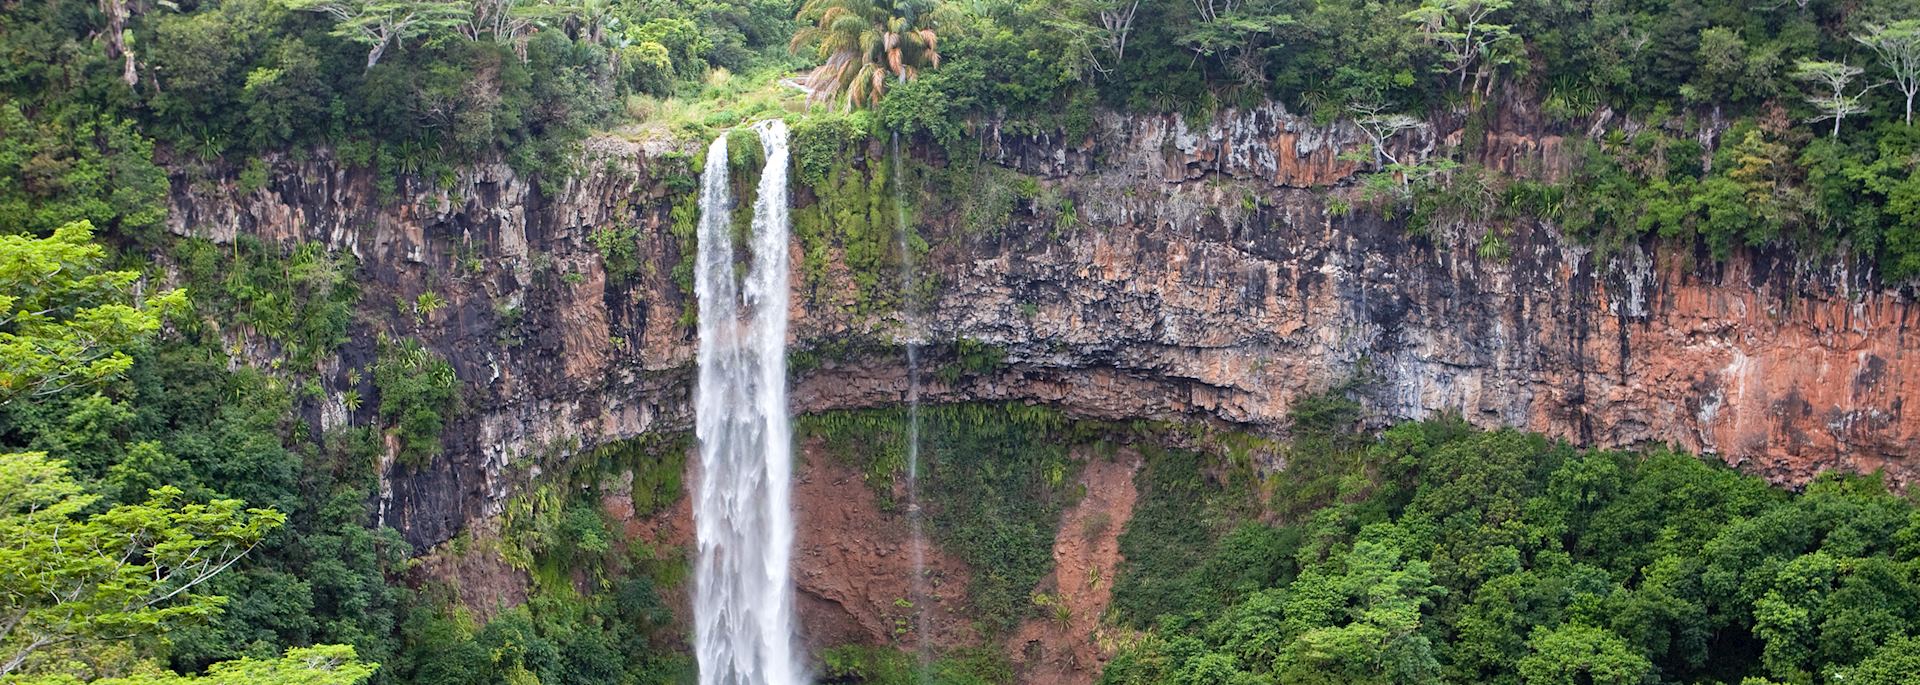 The Chamarel Waterfalls, Mauritius